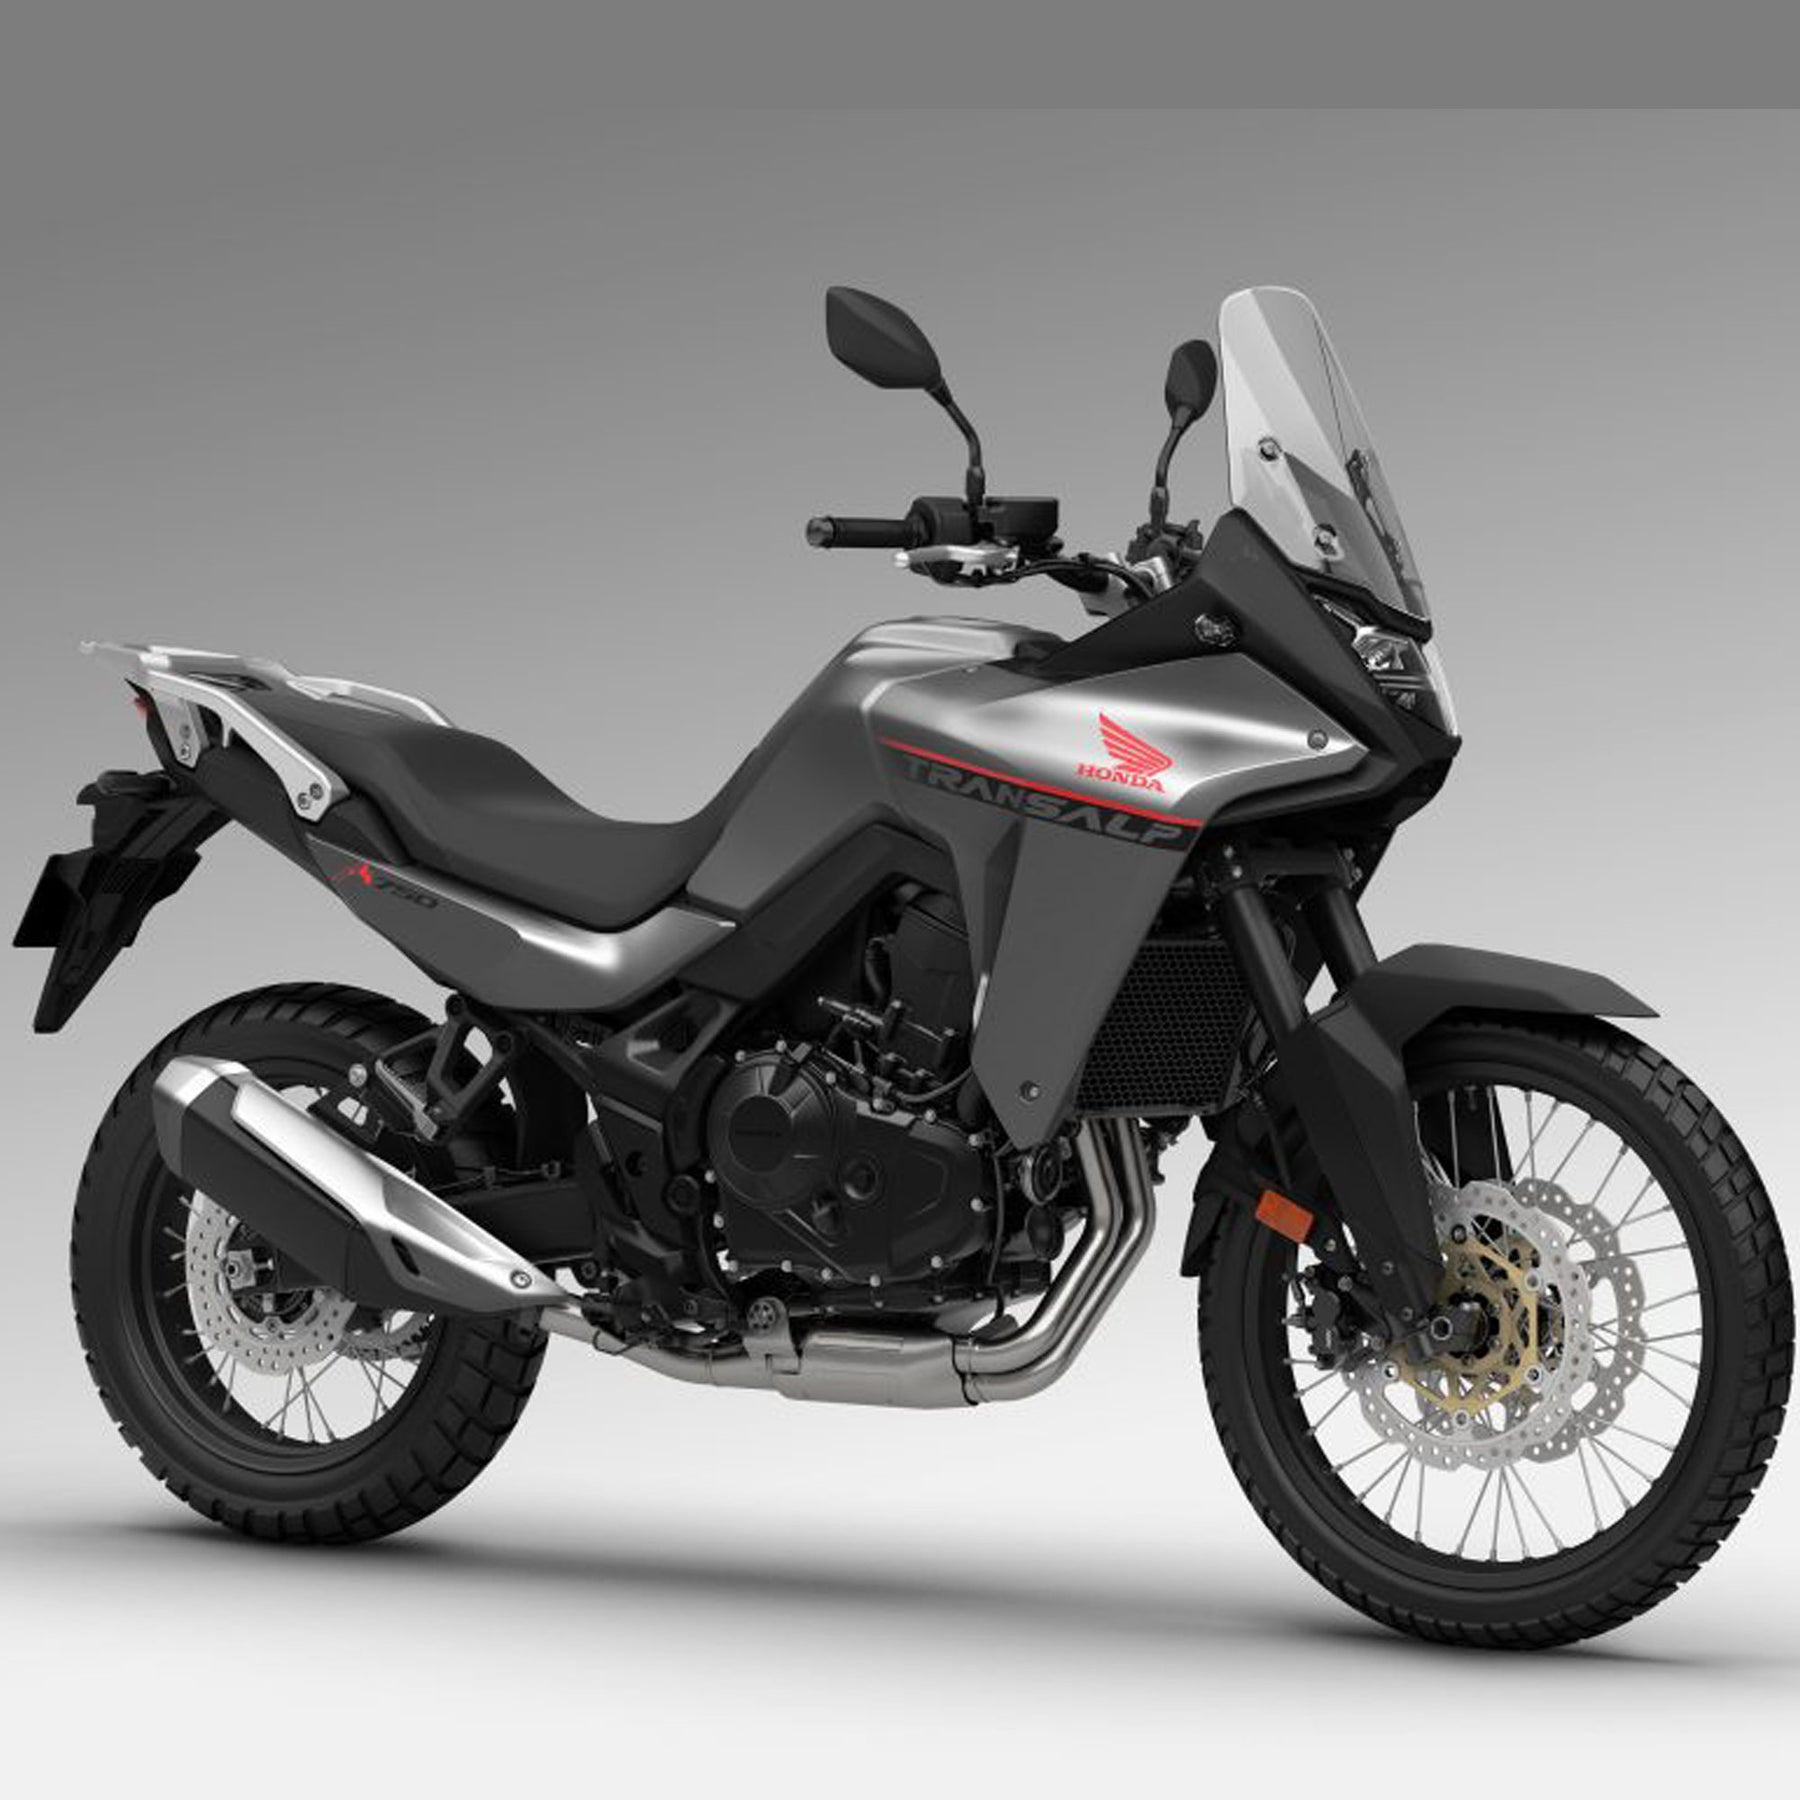 New Honda Bikes | Honda of Bournemouth | X-ADV 750